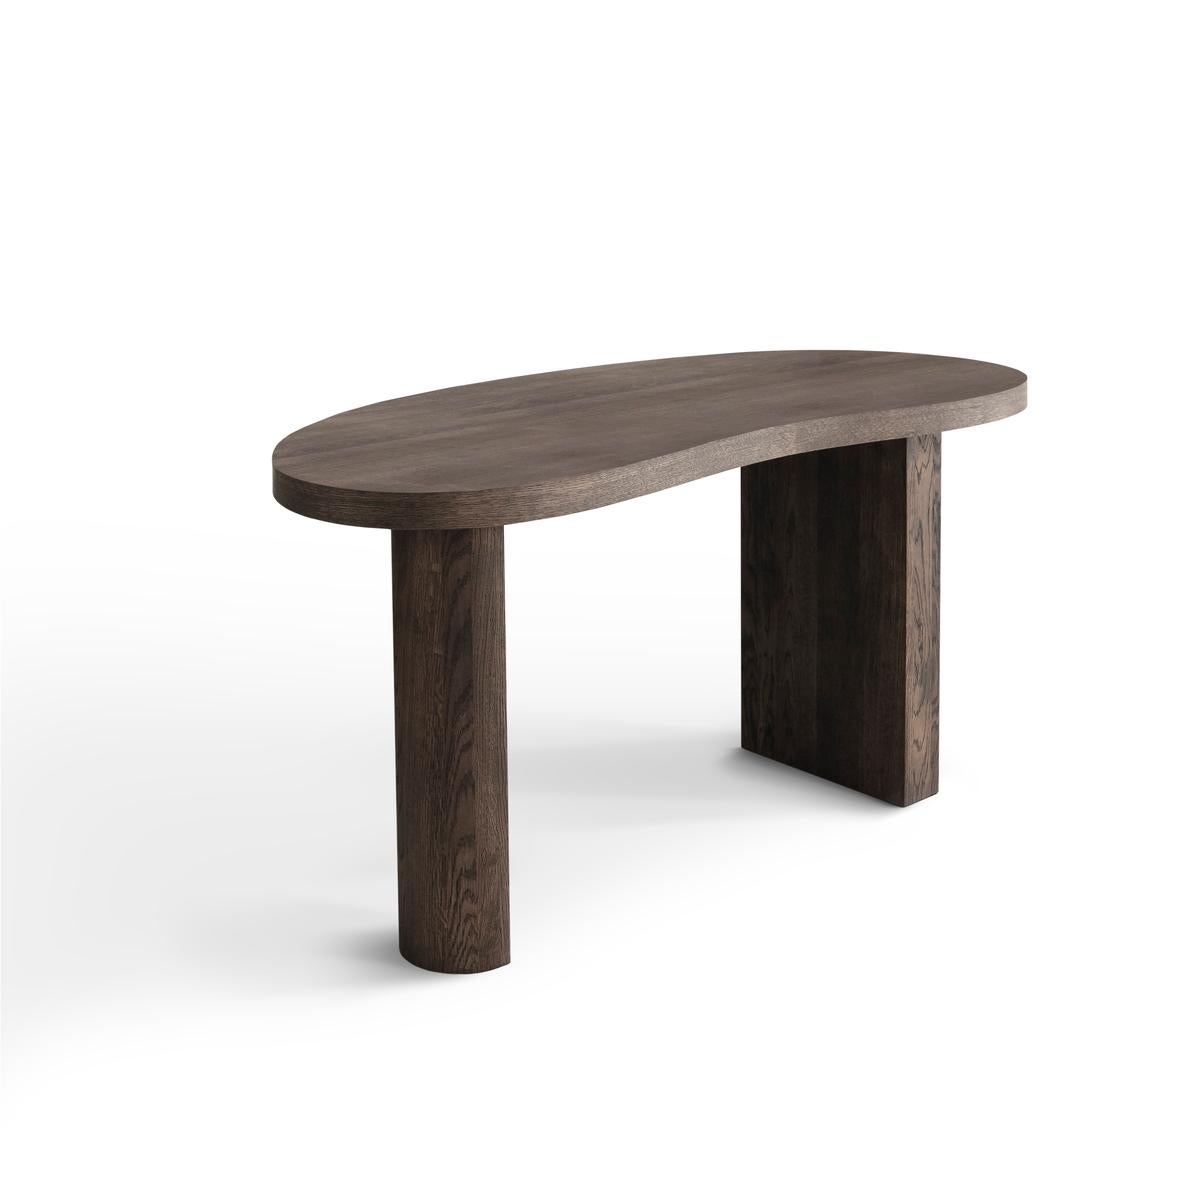 Veneer Contemporary Desk Table 'Ms Bean', Smoked Oak, Black Tabletop For Sale